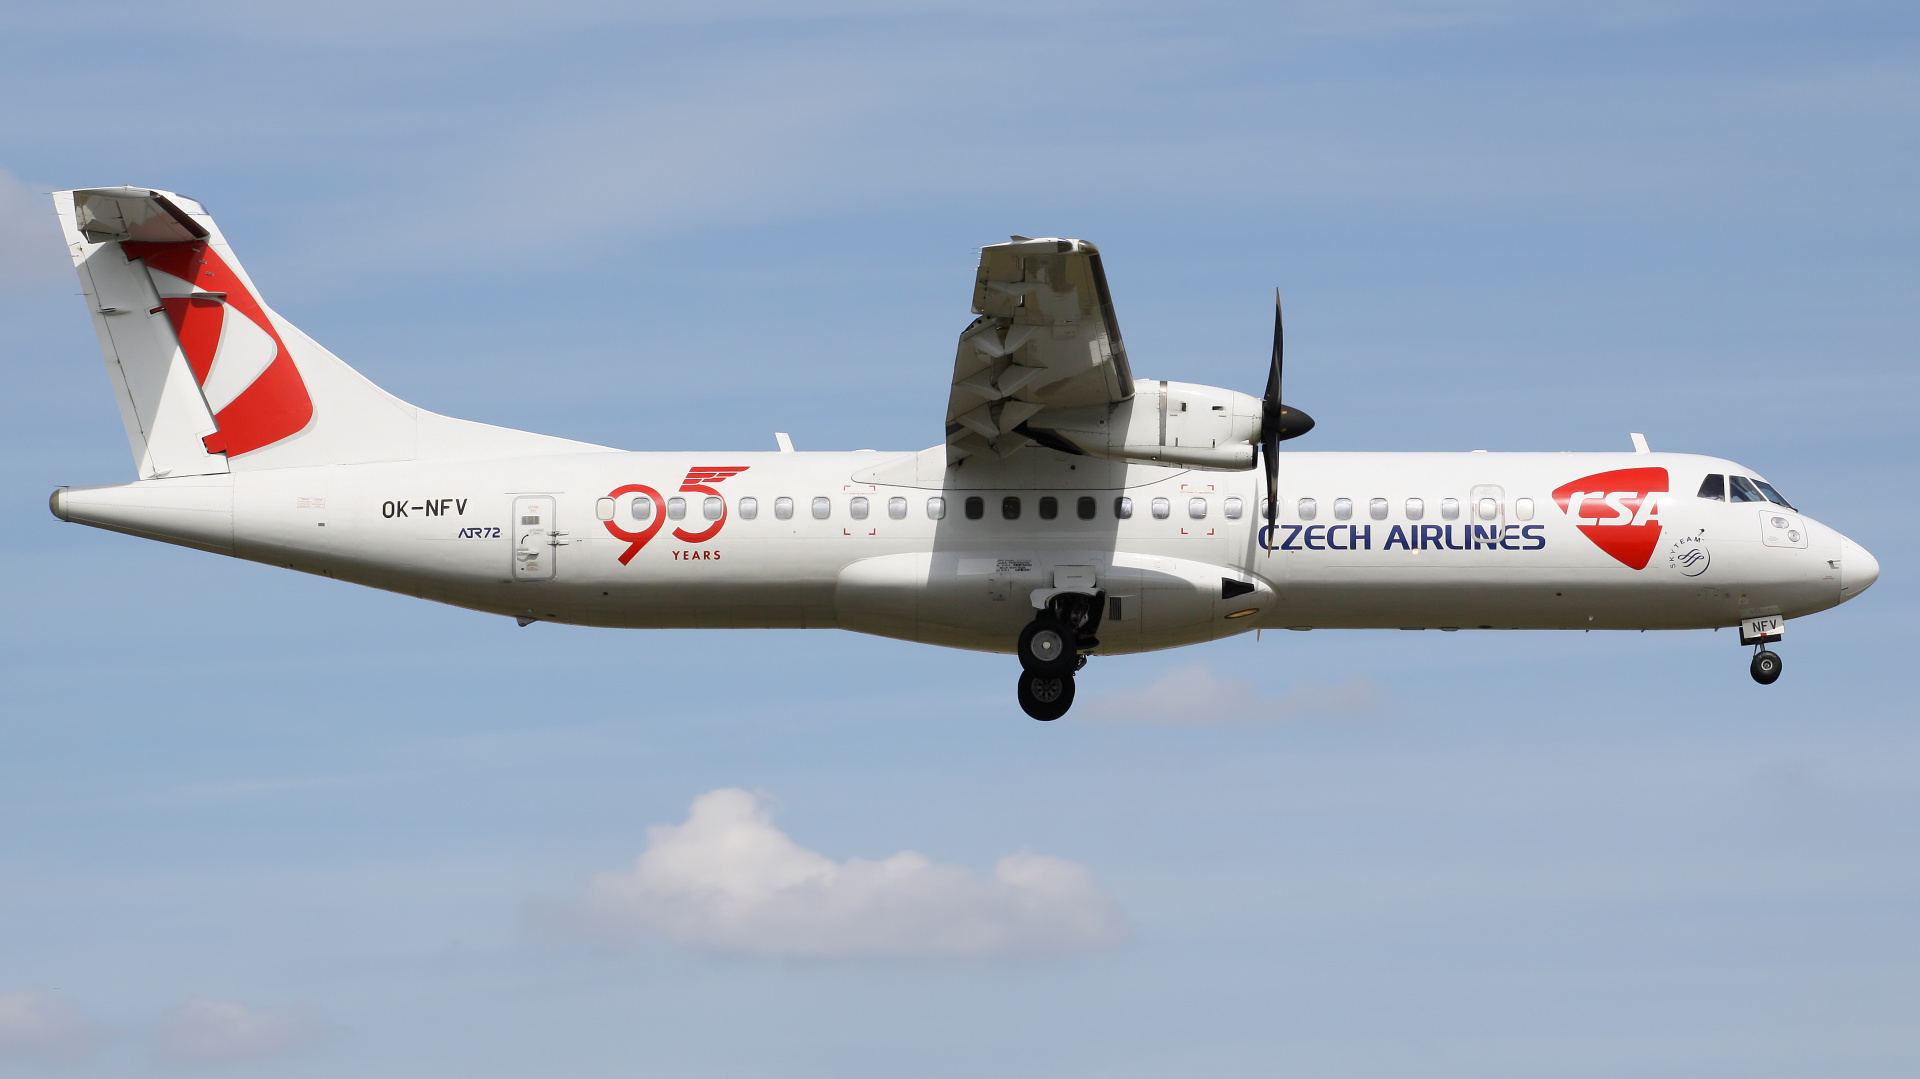 OK-NFV (malowanie 95 lat) (Samoloty » Spotting na EPWA » ATR 72 » CSA Czech Airlines)